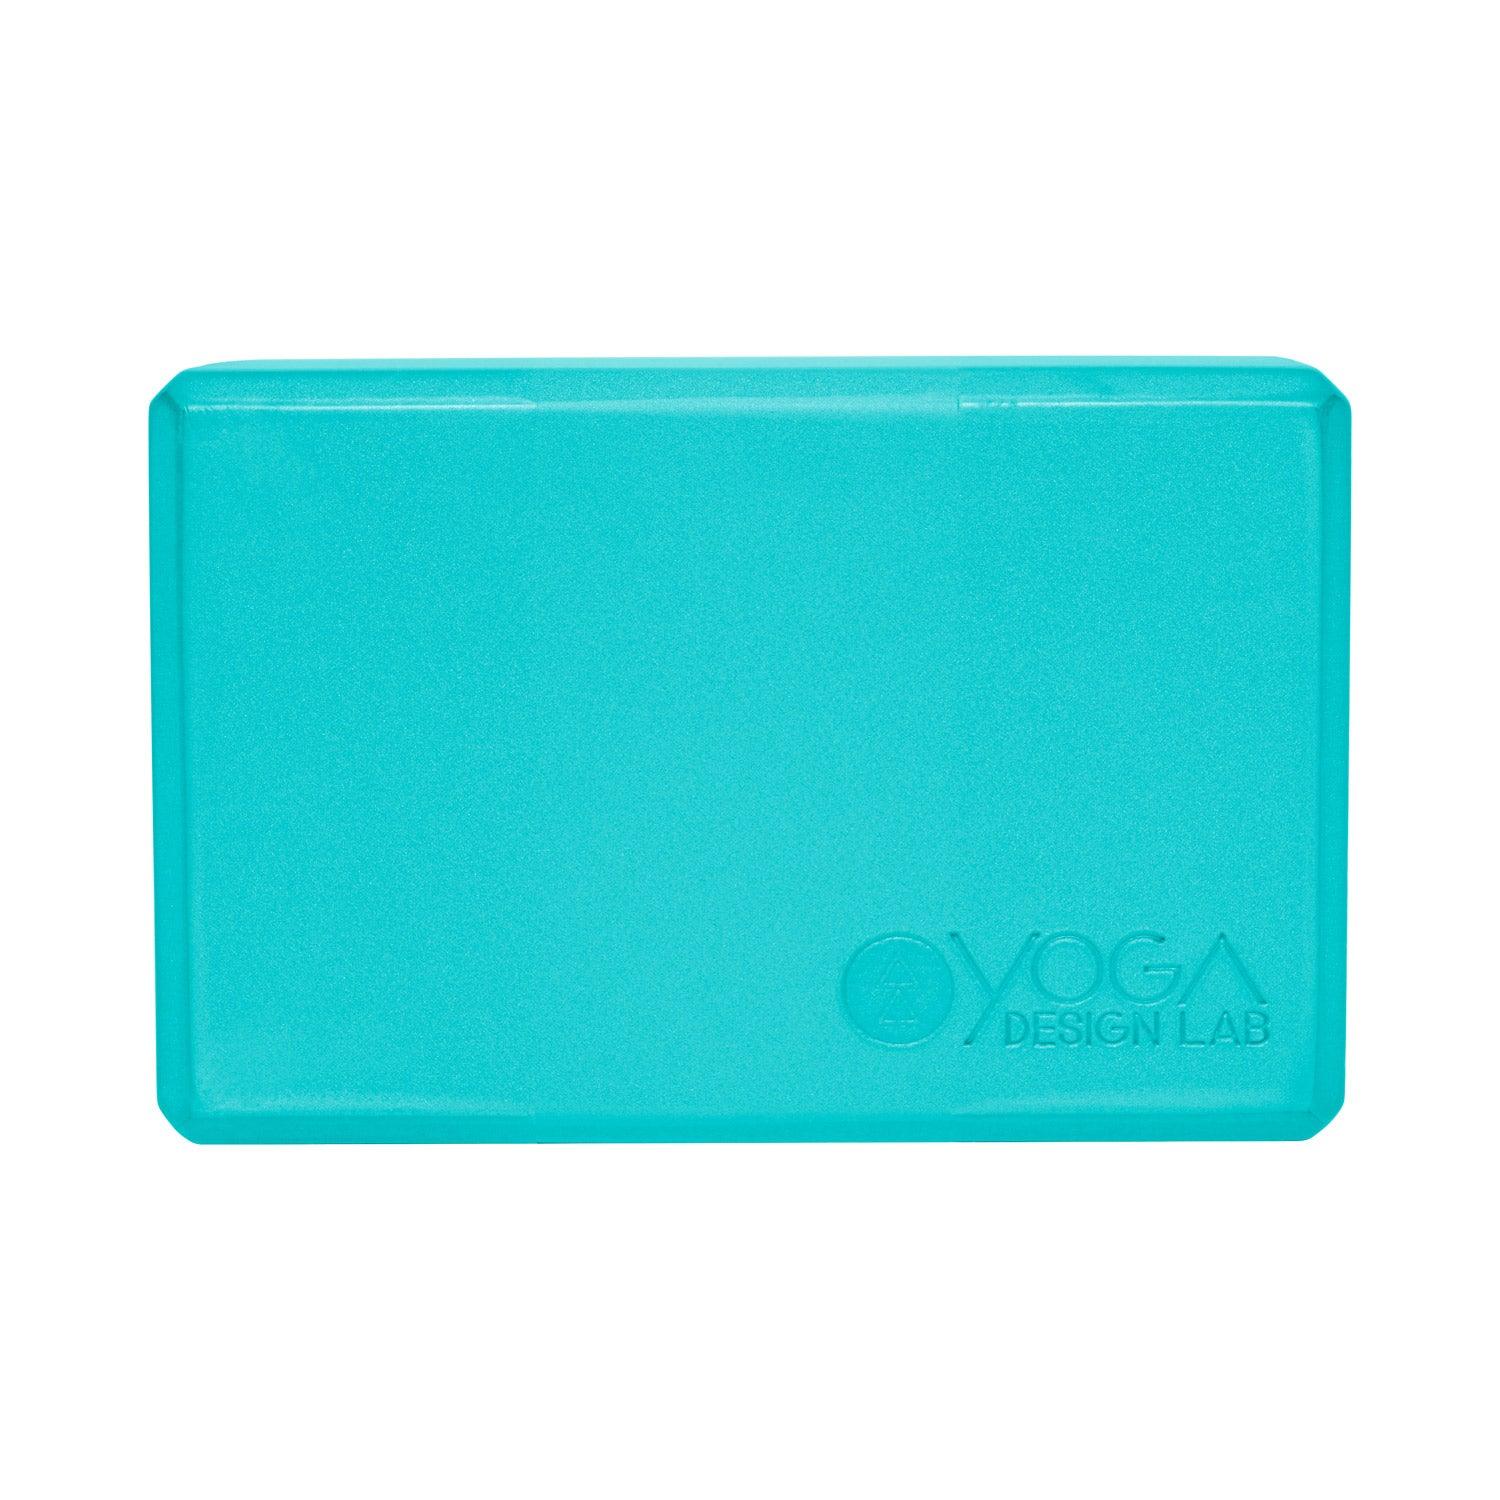 Foam Yoga Block - Aqua Sky - To provide more support for your yoga